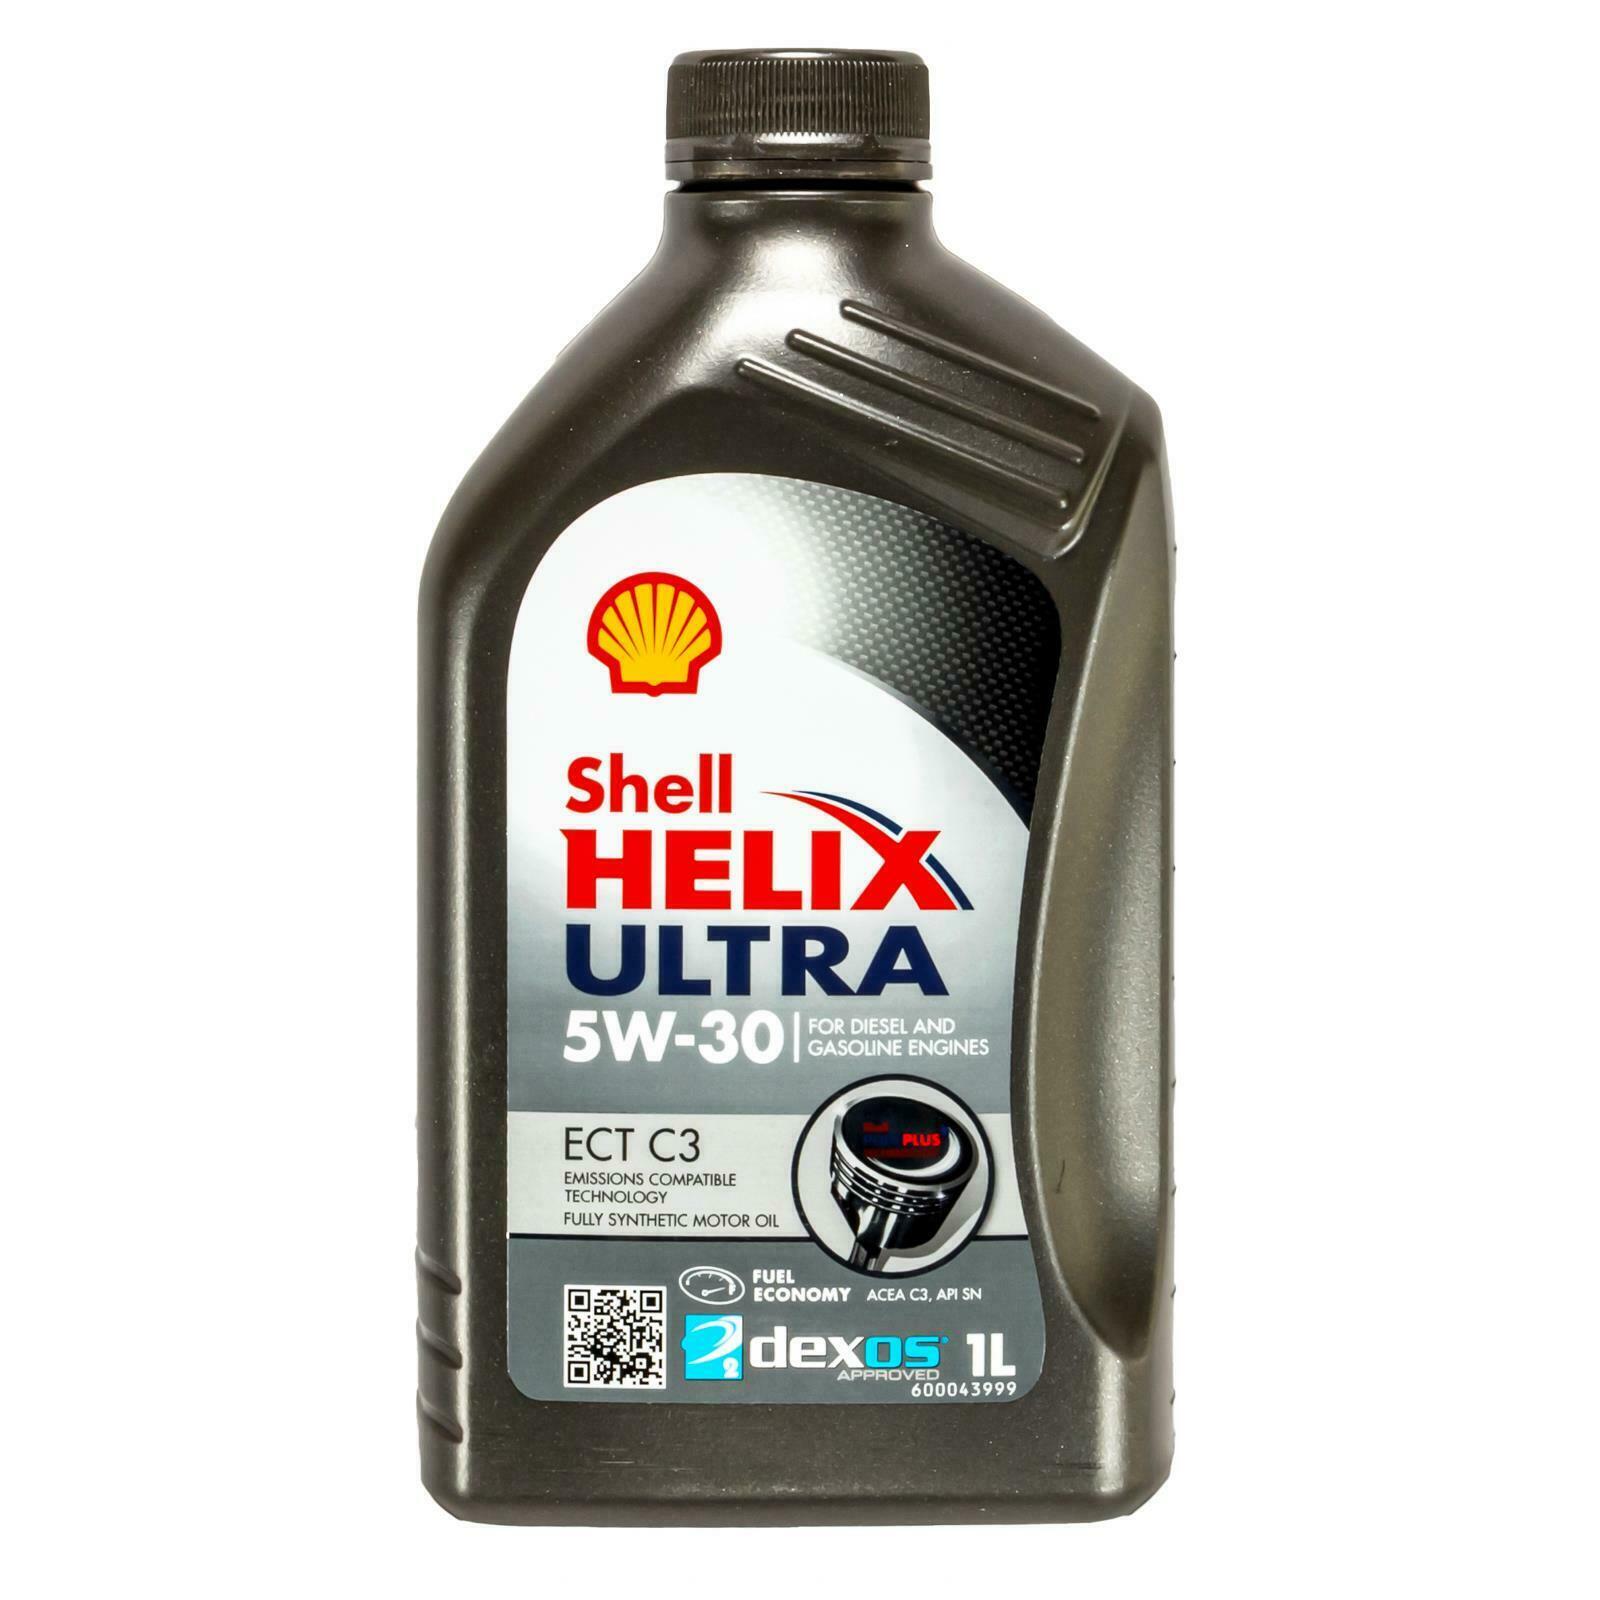 Масло shell ultra ect 5w30. Shell Helix Ultra 5w30. Shell Helix Ultra ect c3. Shell 550042845. Shell Helix Ultra состояние двигателя.